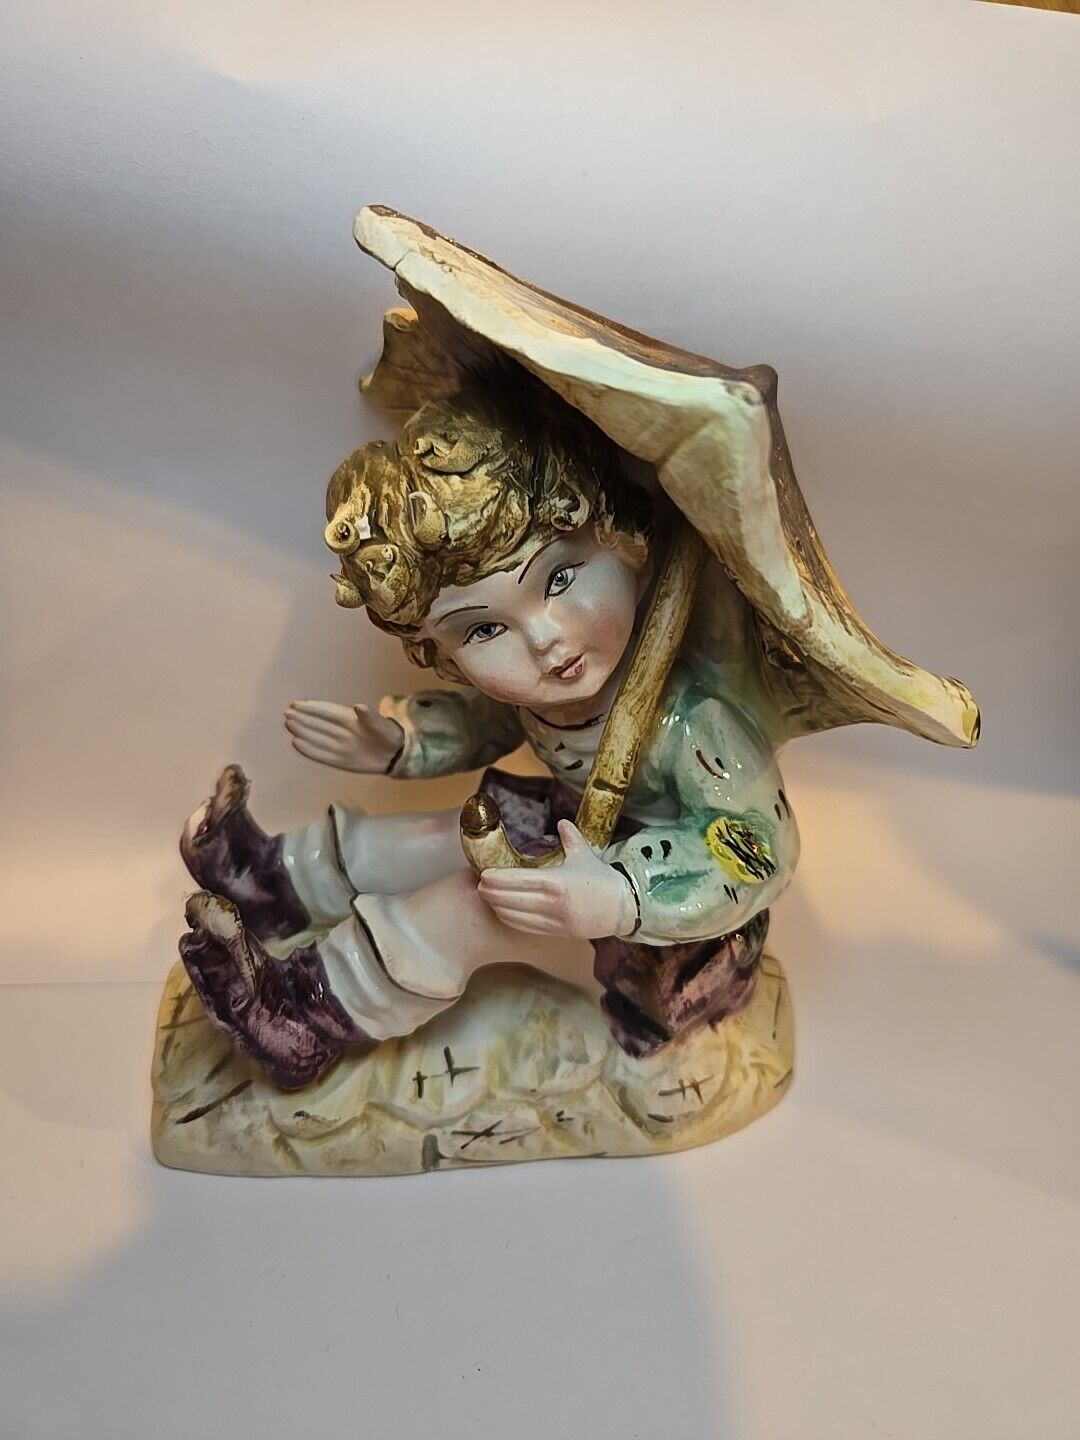 Vintage Italian Porcelain Figure Figurine Hand Painted Collectible Decorative